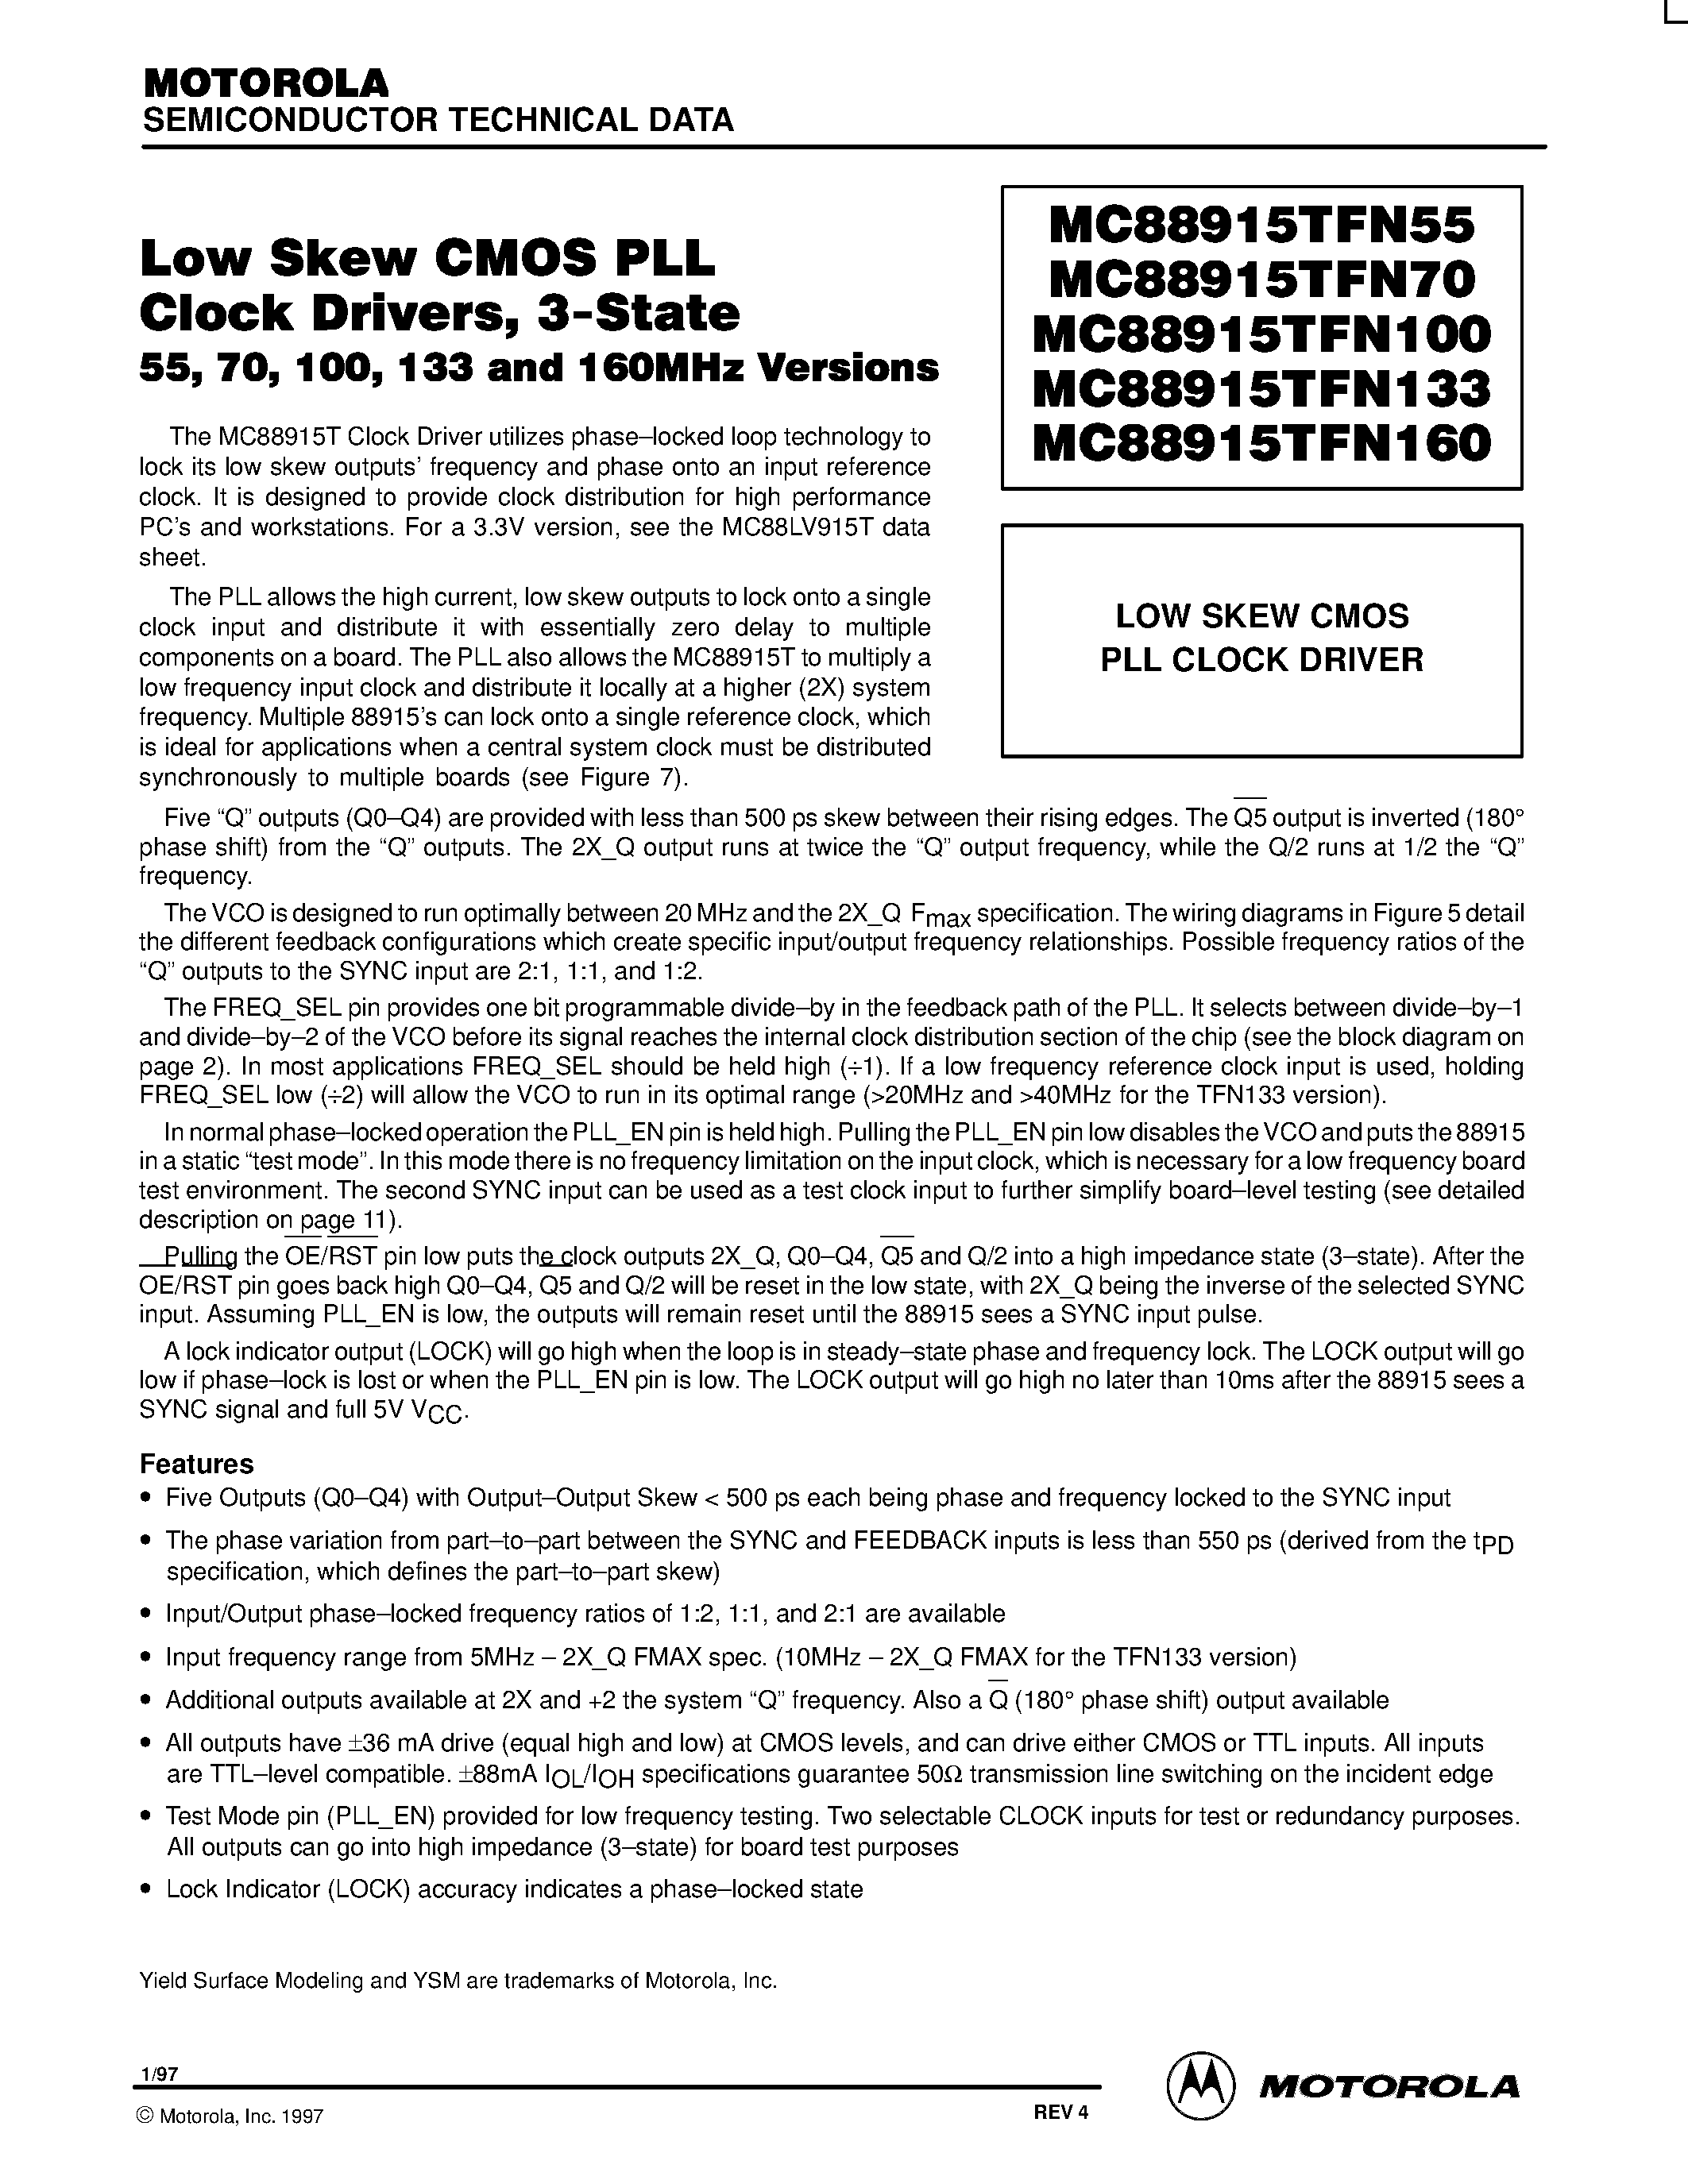 Datasheet MC88915TFN55 - LOW SKEW CMOS PLL CLOCK DRIVER page 1